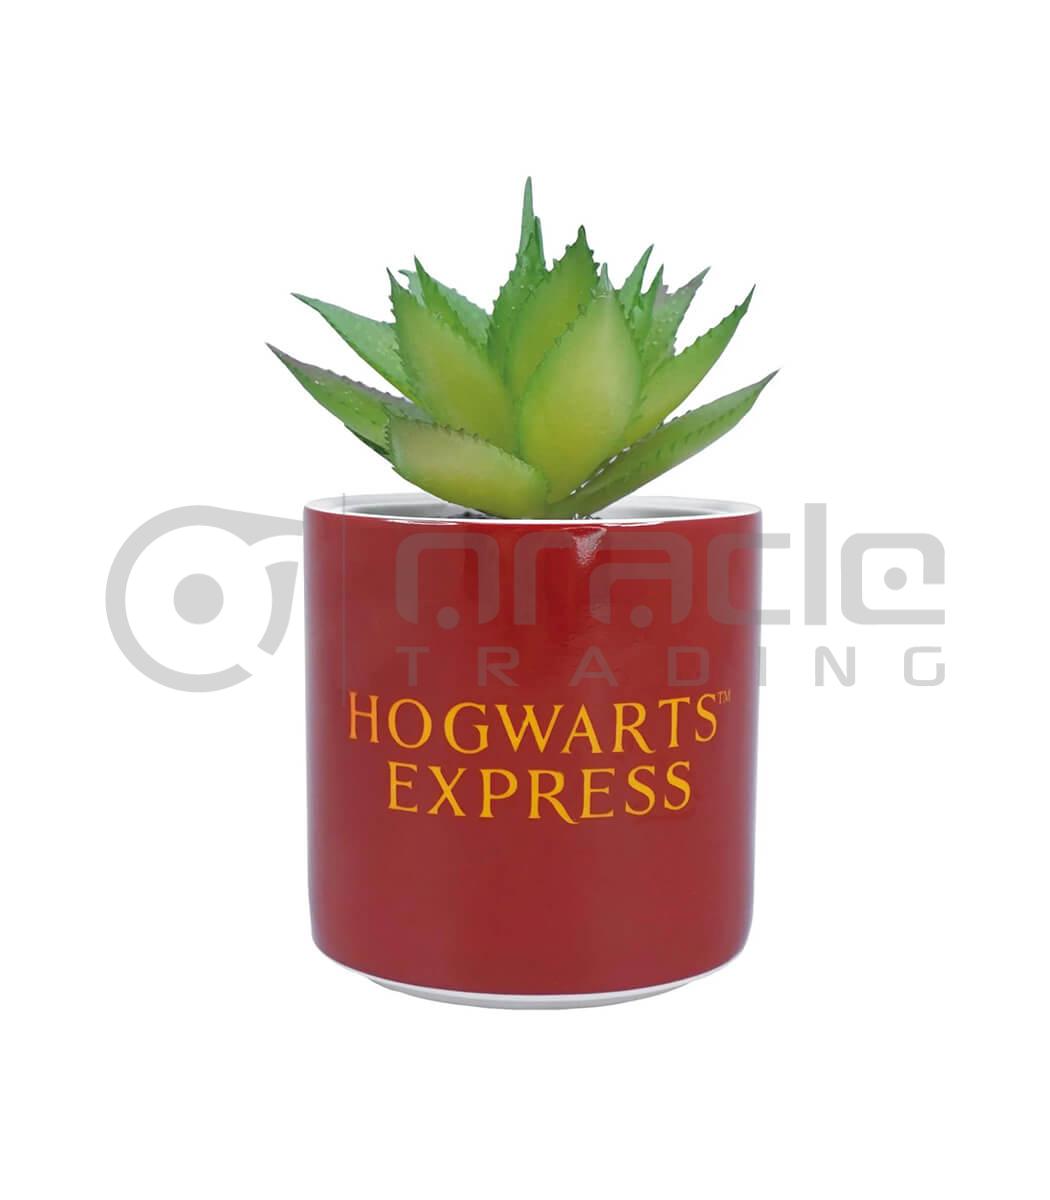 plant pot harry potter hogwarts express hpx115 c